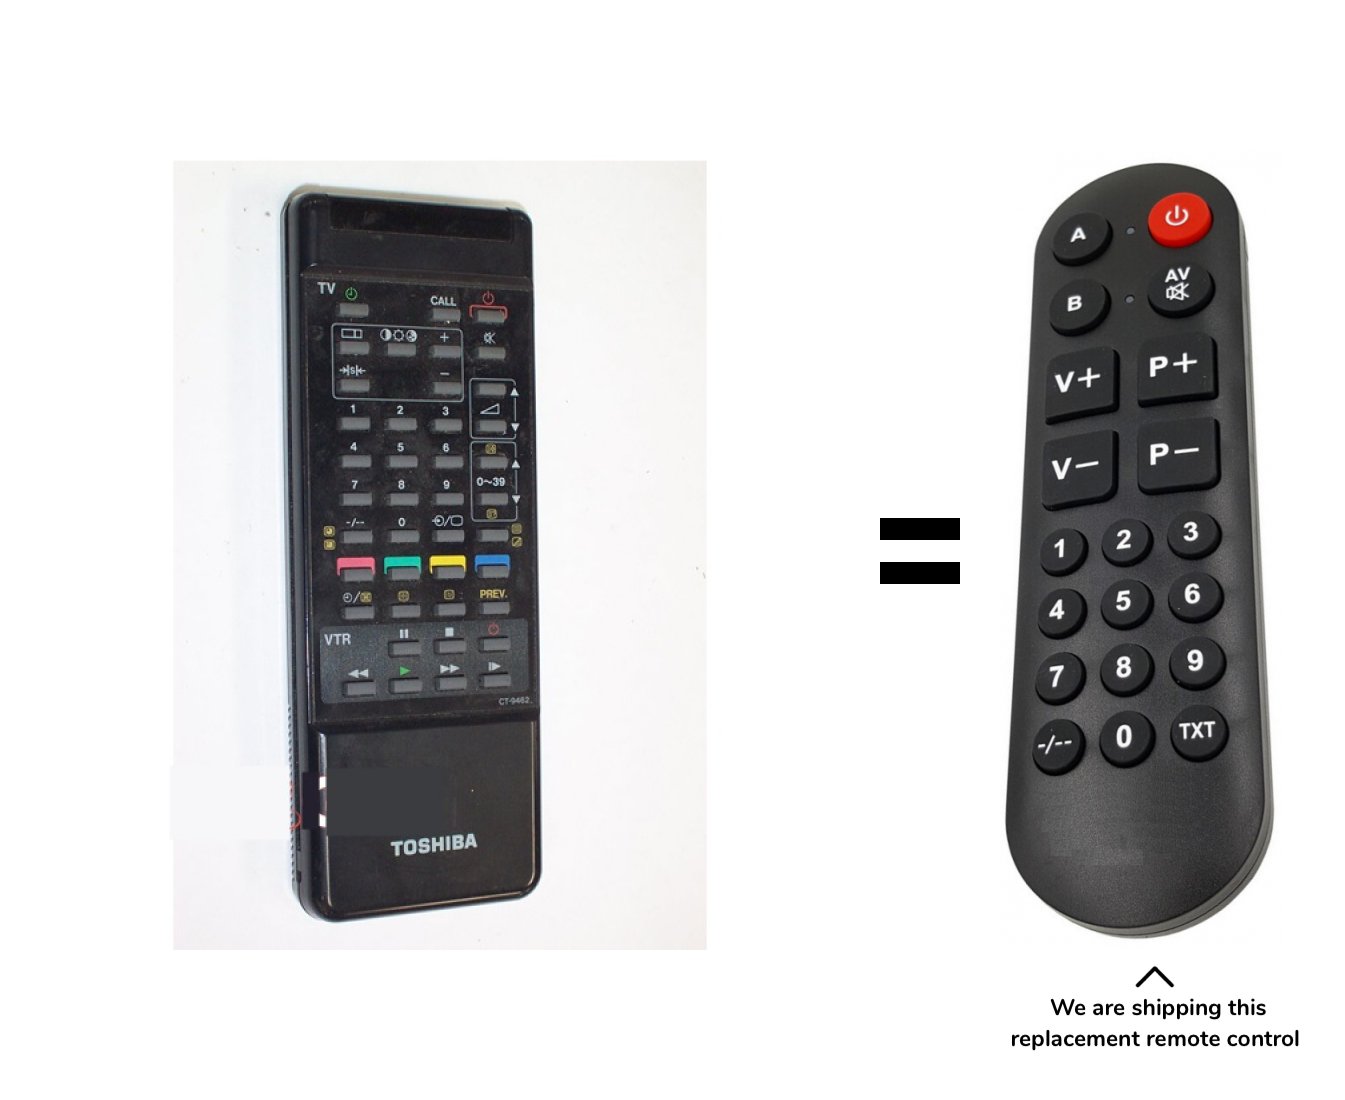 Toshiba 2101TBT remote control for seniors